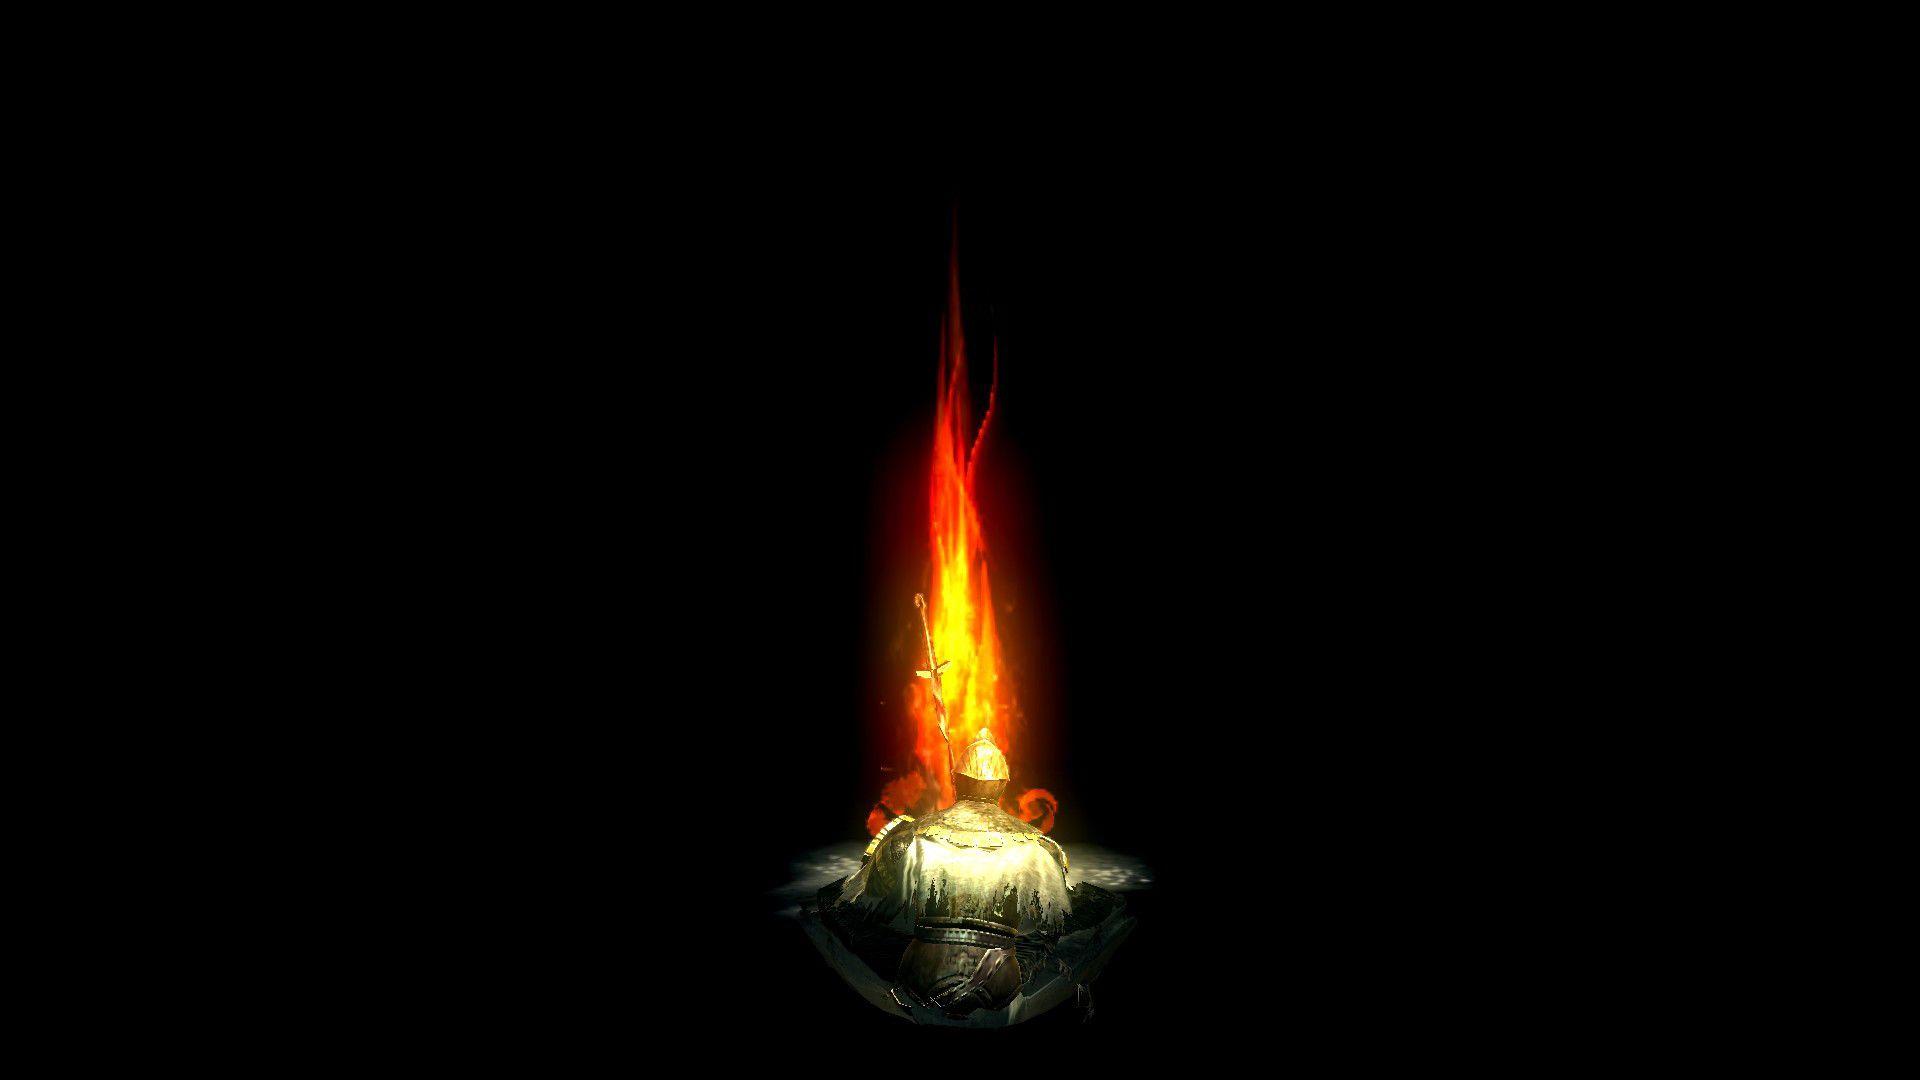 Dark Souls Bonfire Wallpapers - Top Free Dark Souls Bonfire Backgrounds